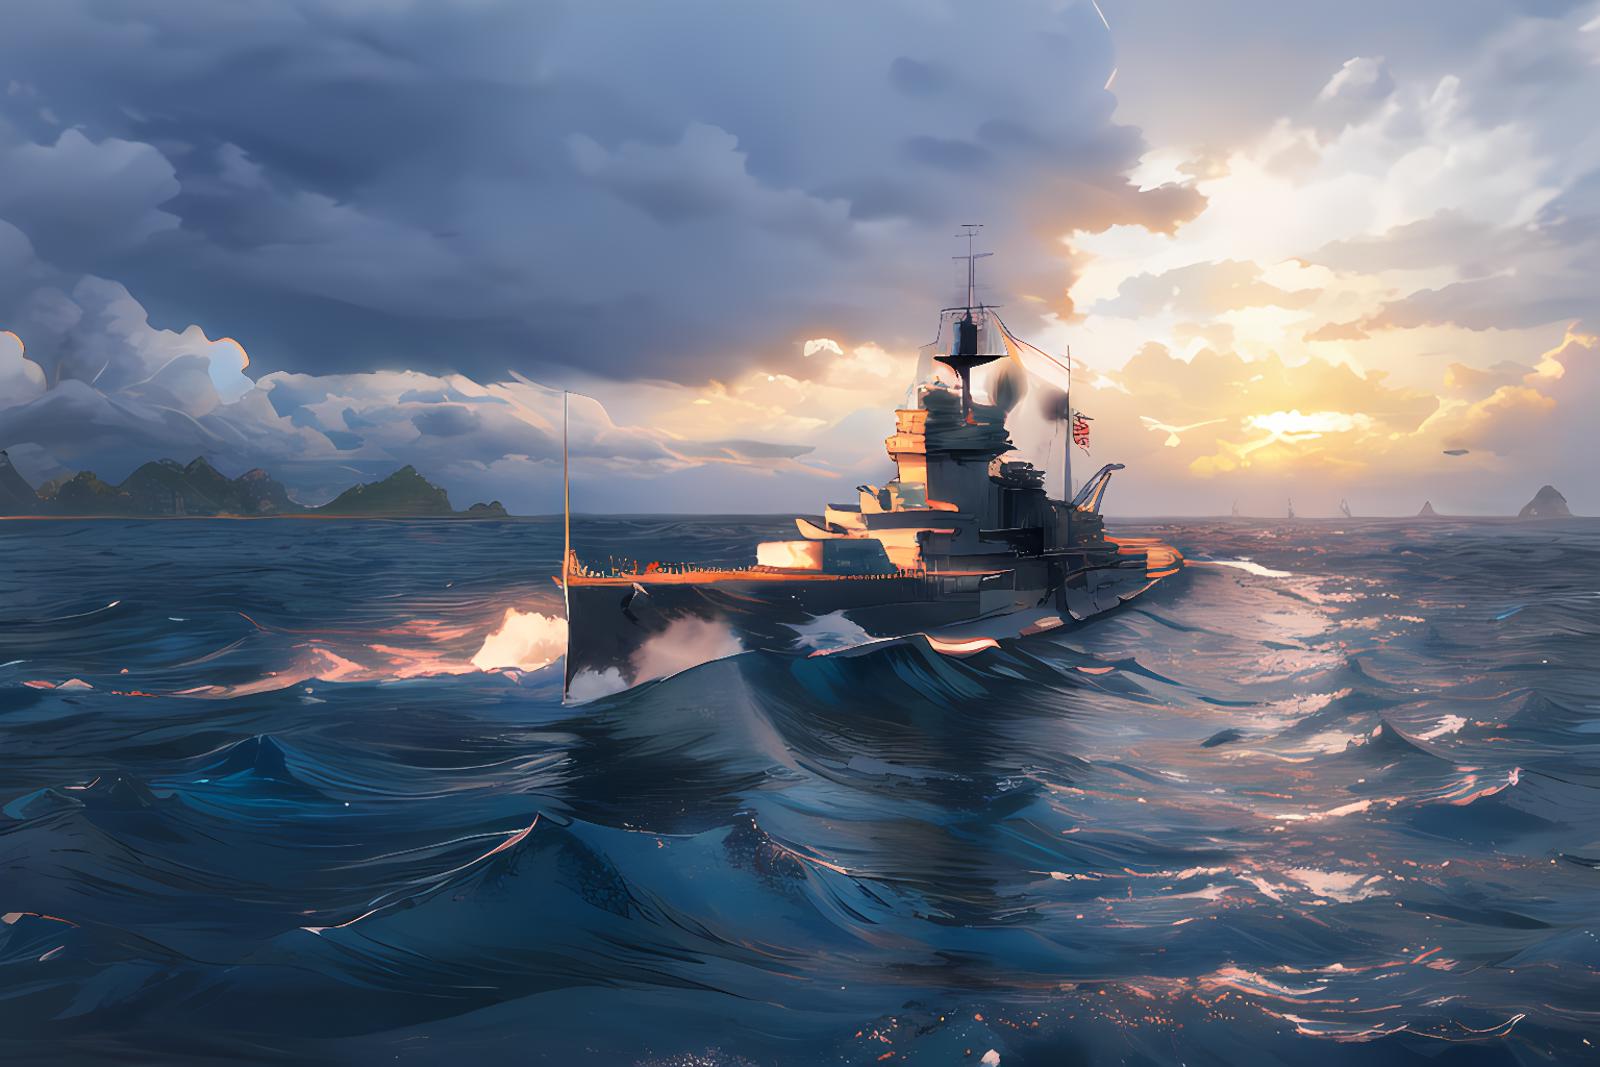 HMS Warspite Battleship image by MajMorse